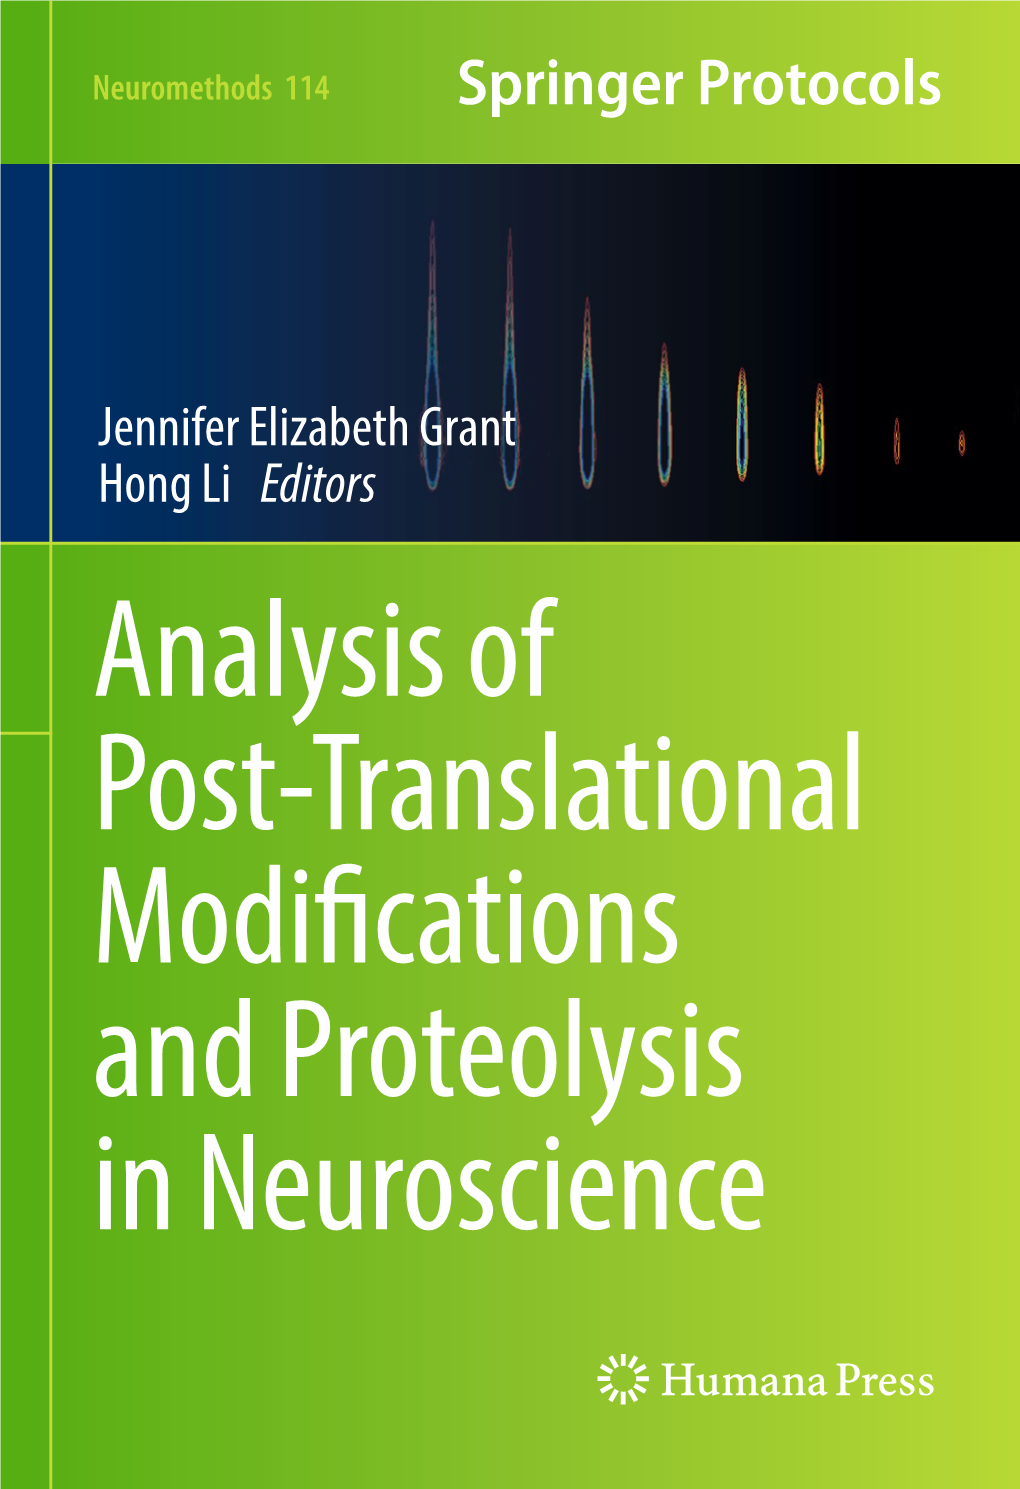 Jennifer Elizabeth Grant Hong Li Editors Analysis of Post-Translational Modi Cations and Proteolysis in Neuroscience N EUROMETHODS